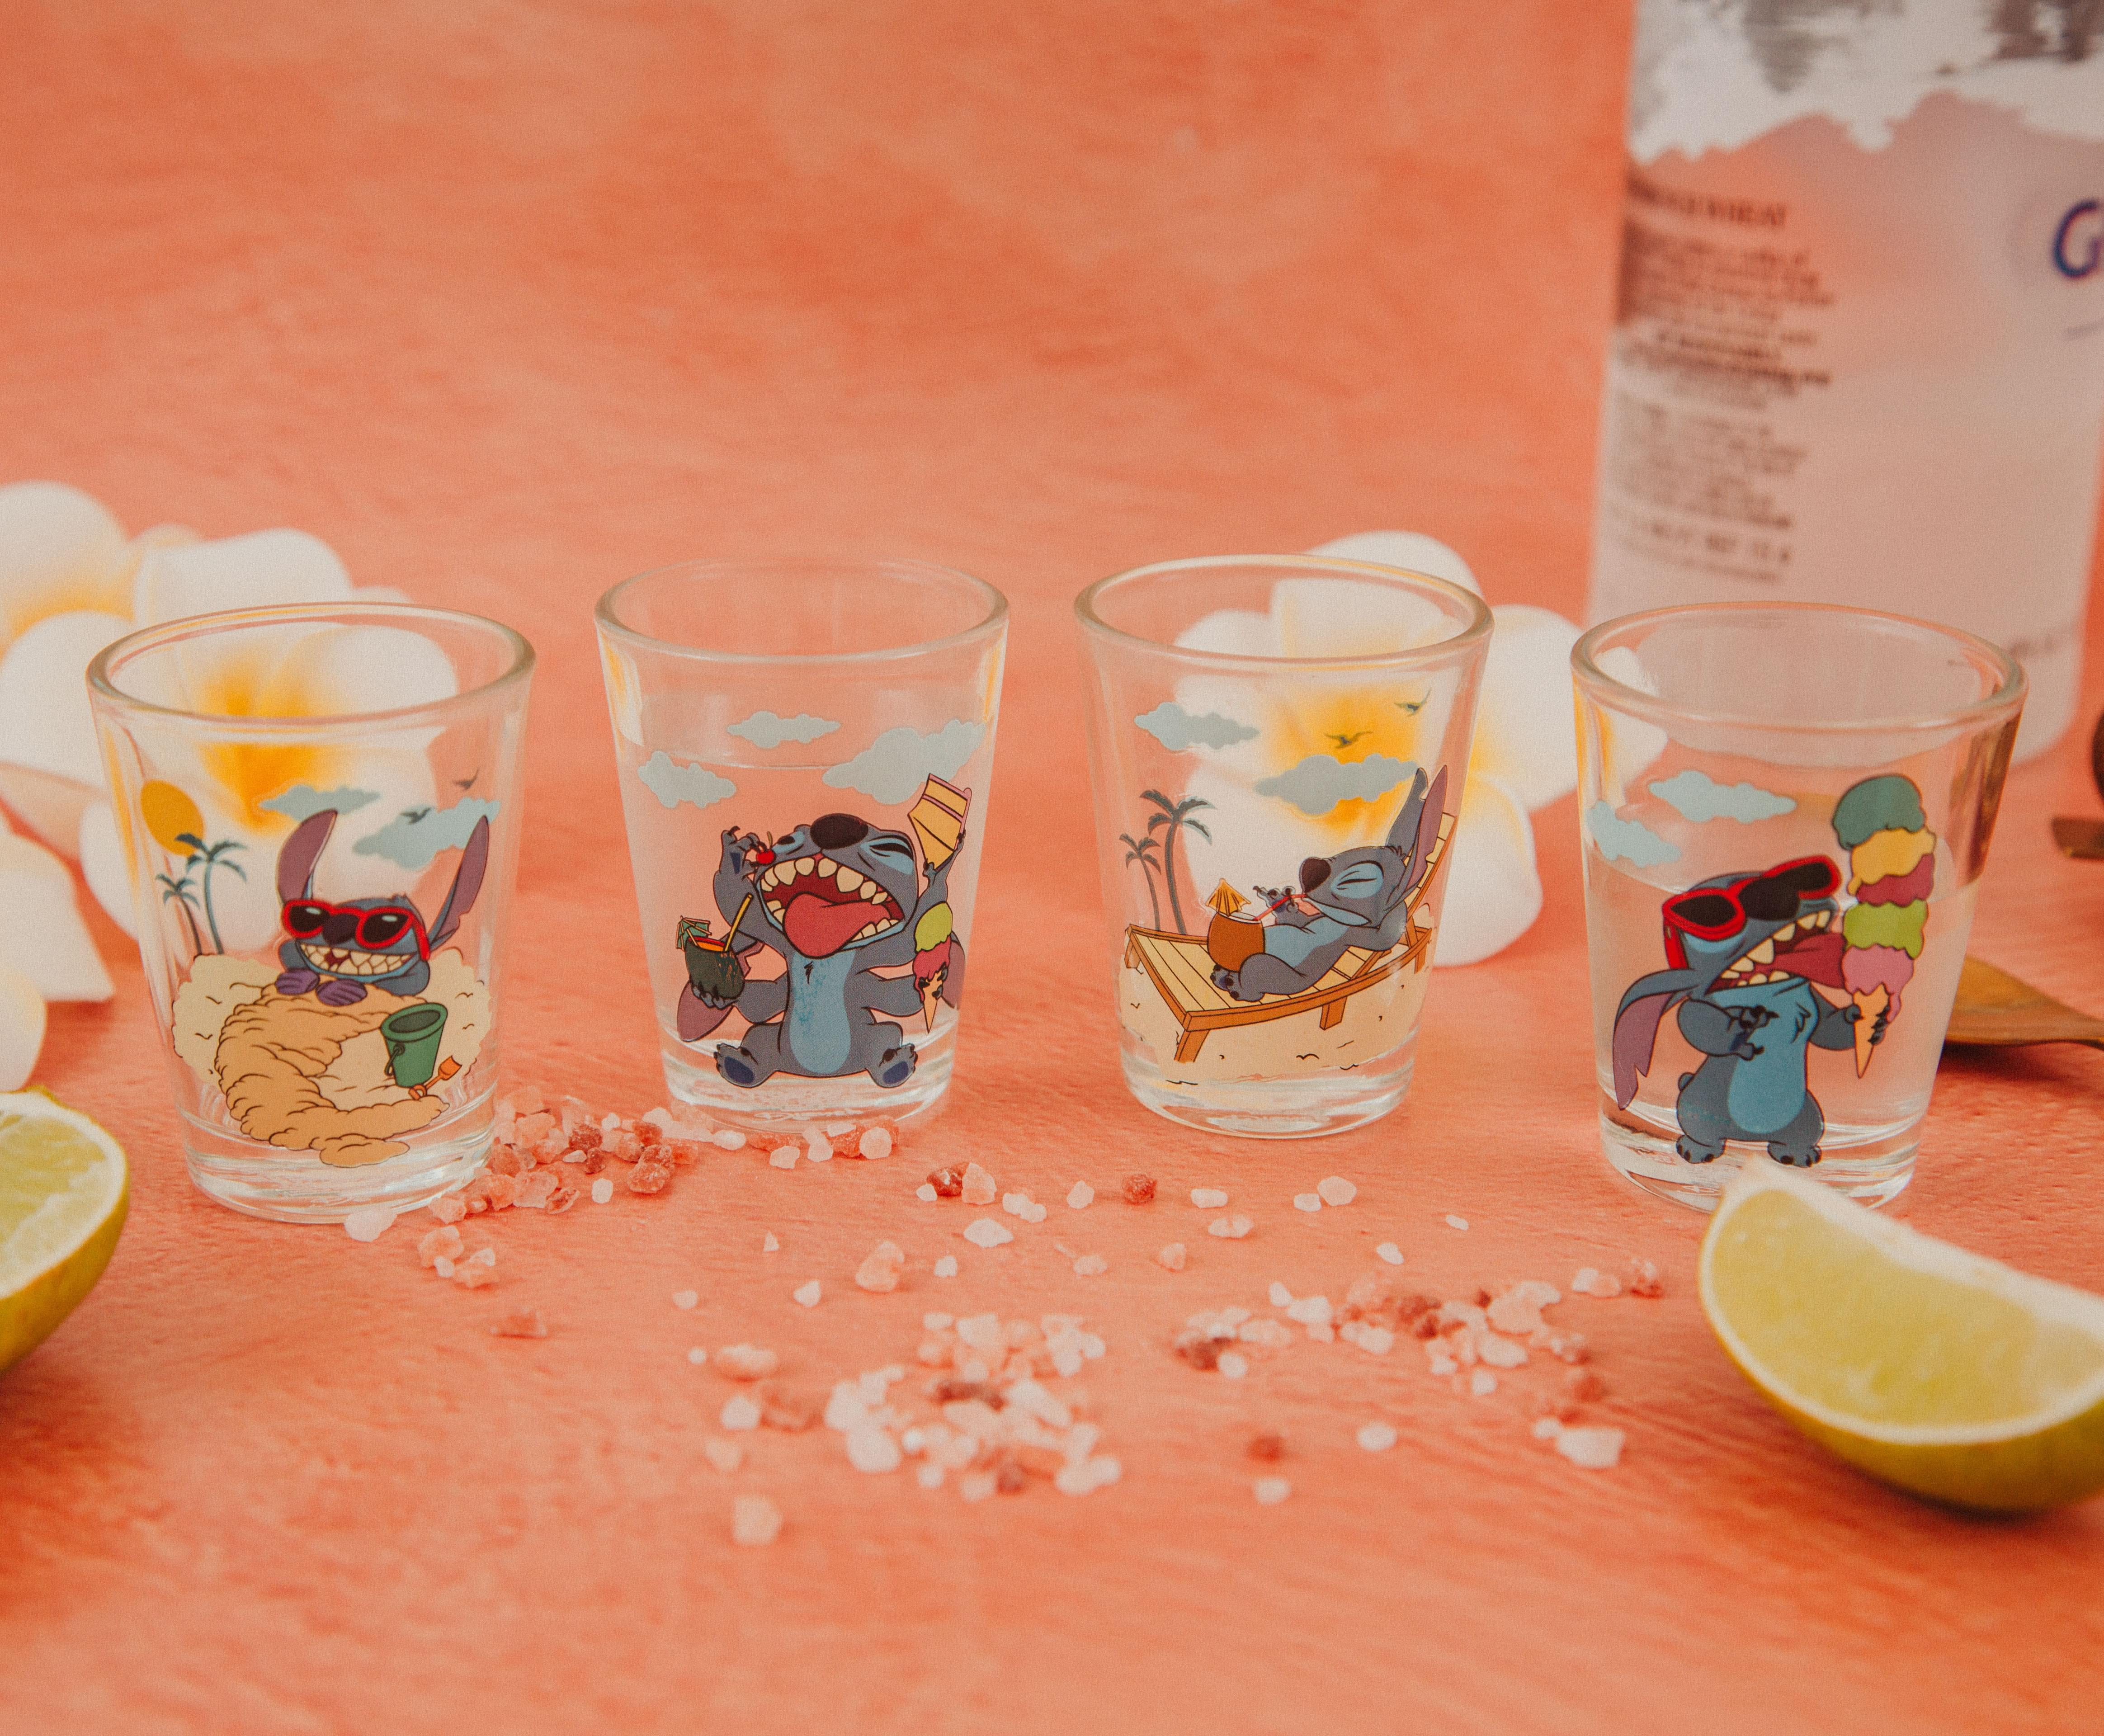 Disney Lilo and Stitch Sweets 4-Pack Shot Glass Set